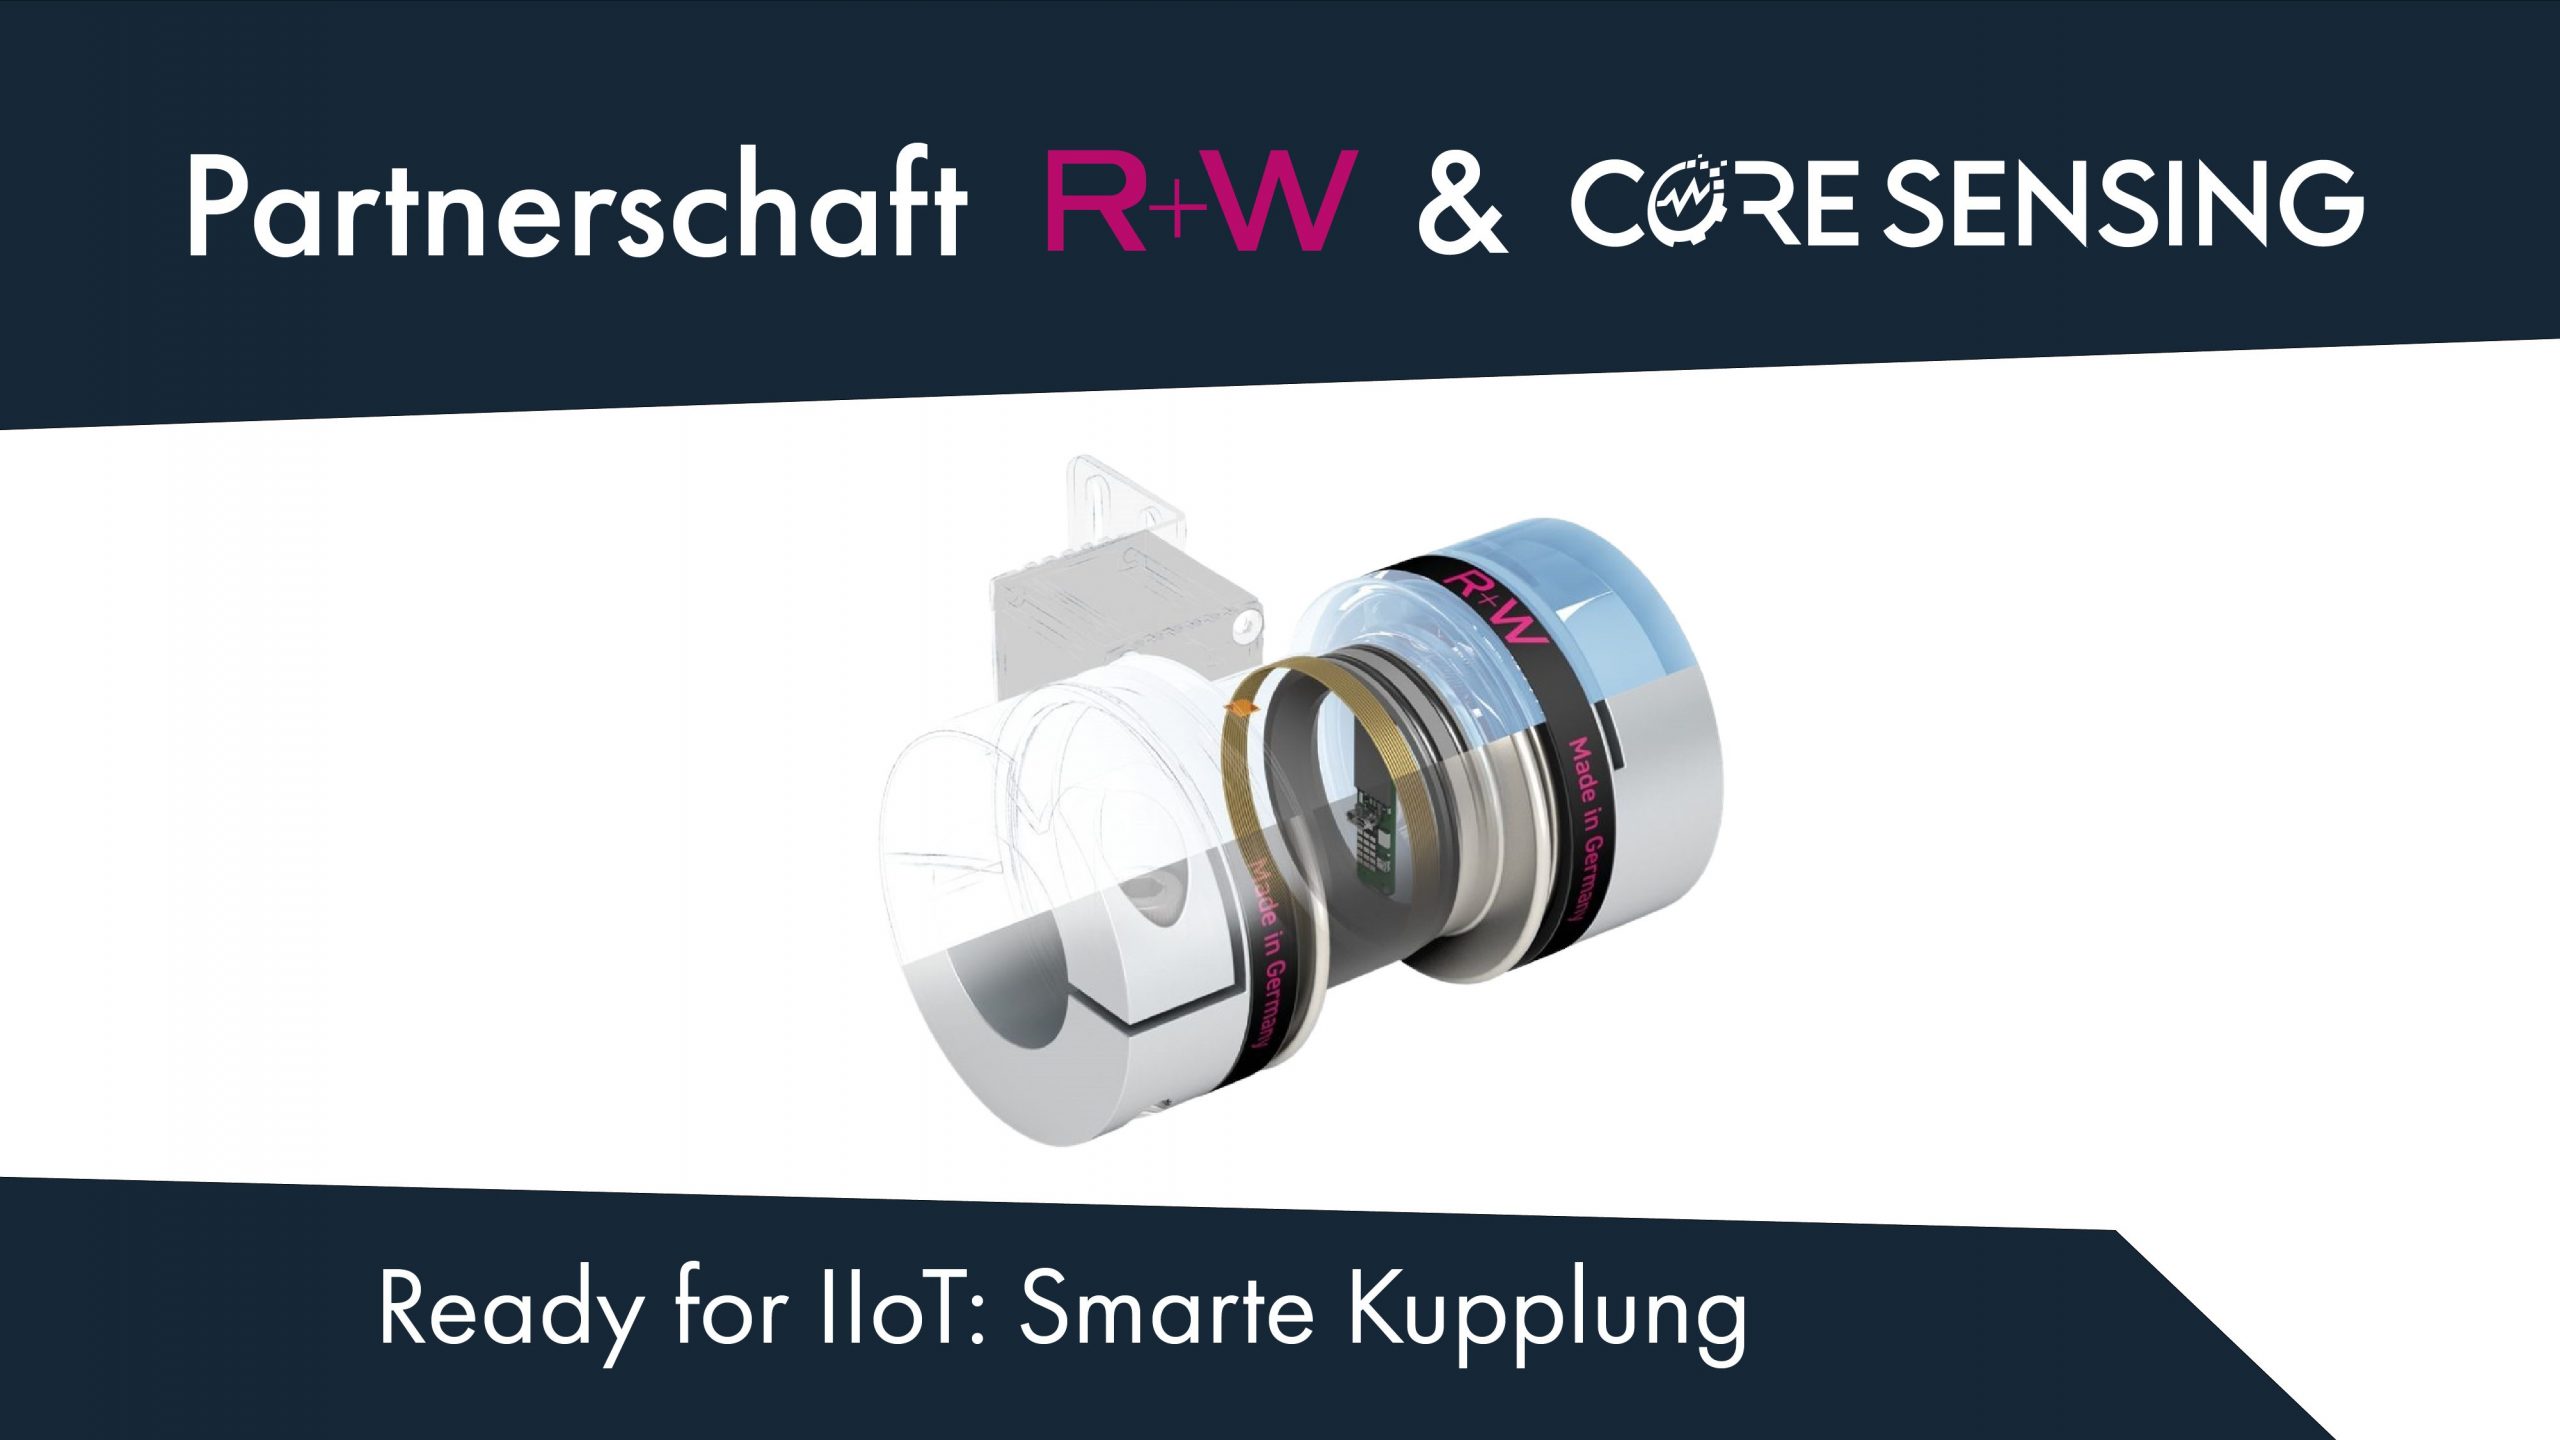 Partnership R+W & core sensing_smart coupling